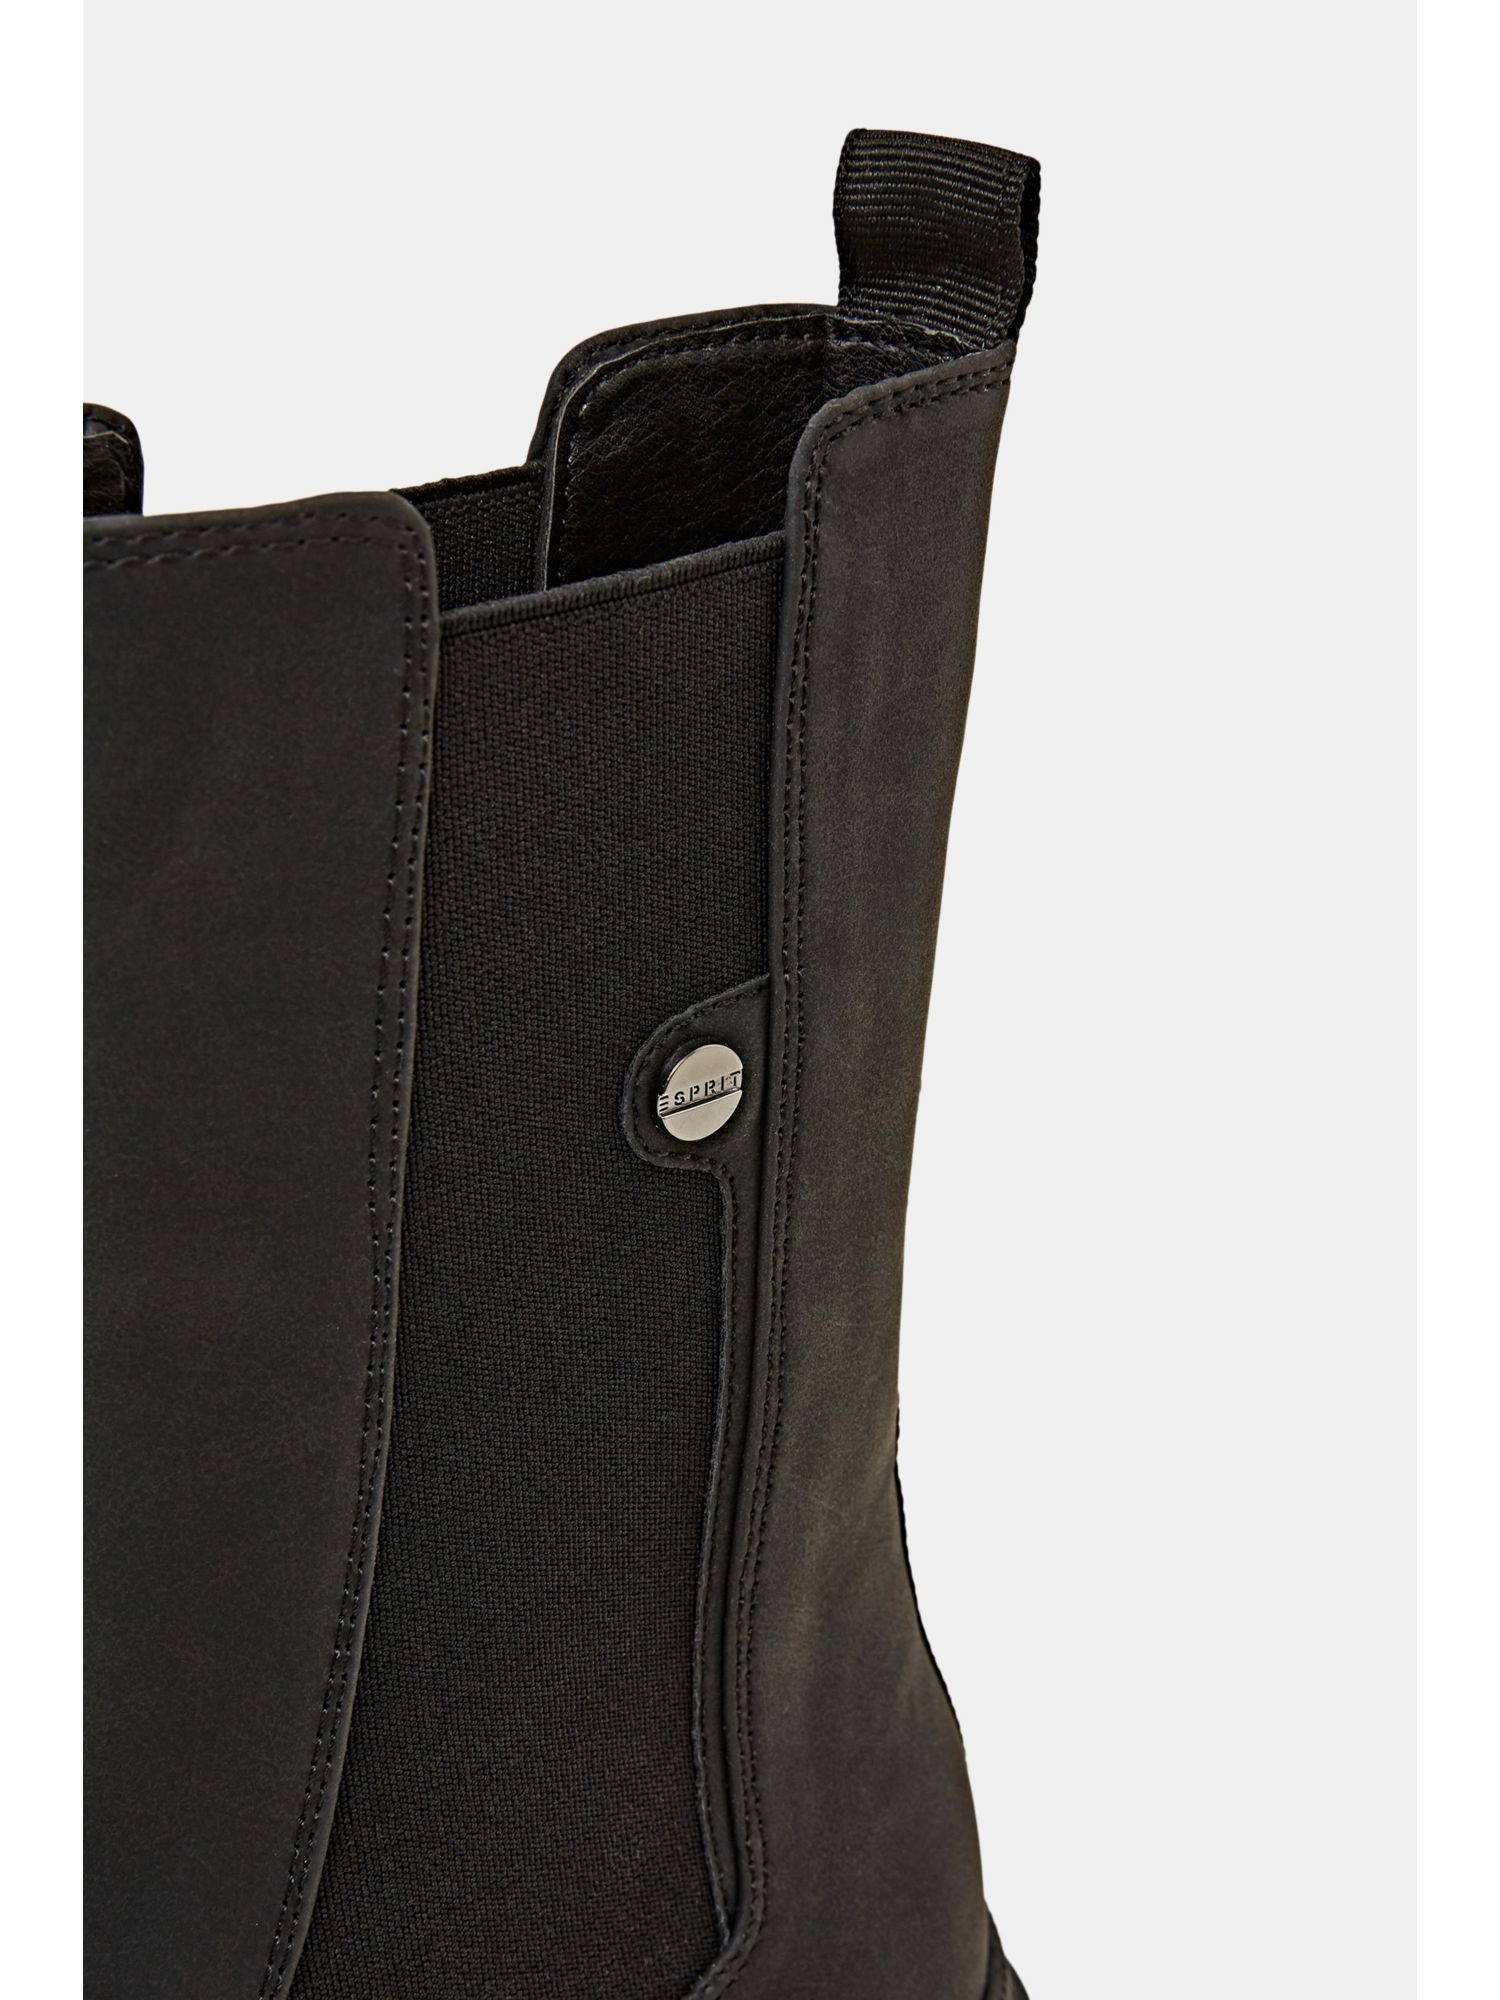 Esprit Grobe in Stiefelette Boots Lederoptik BLACK